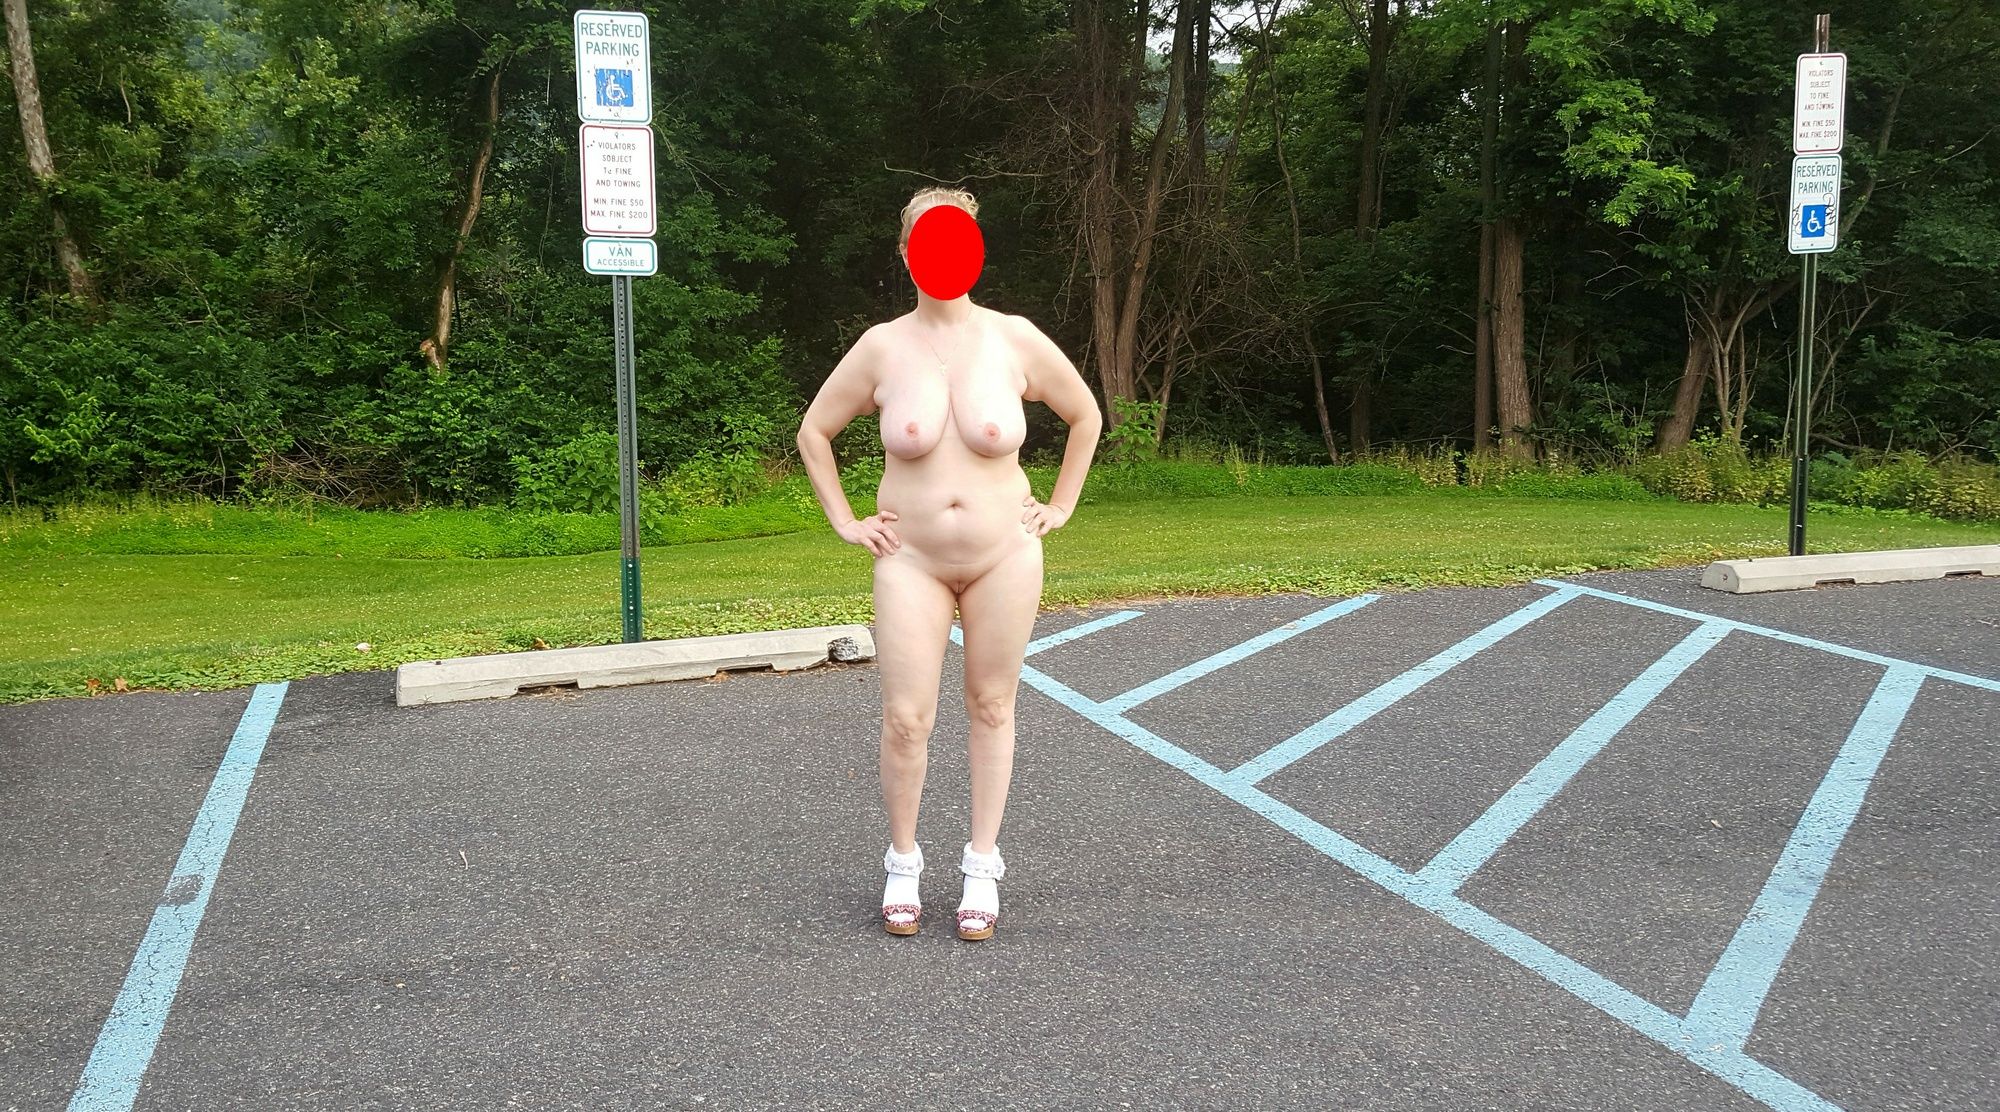 naked parking lot walk #55